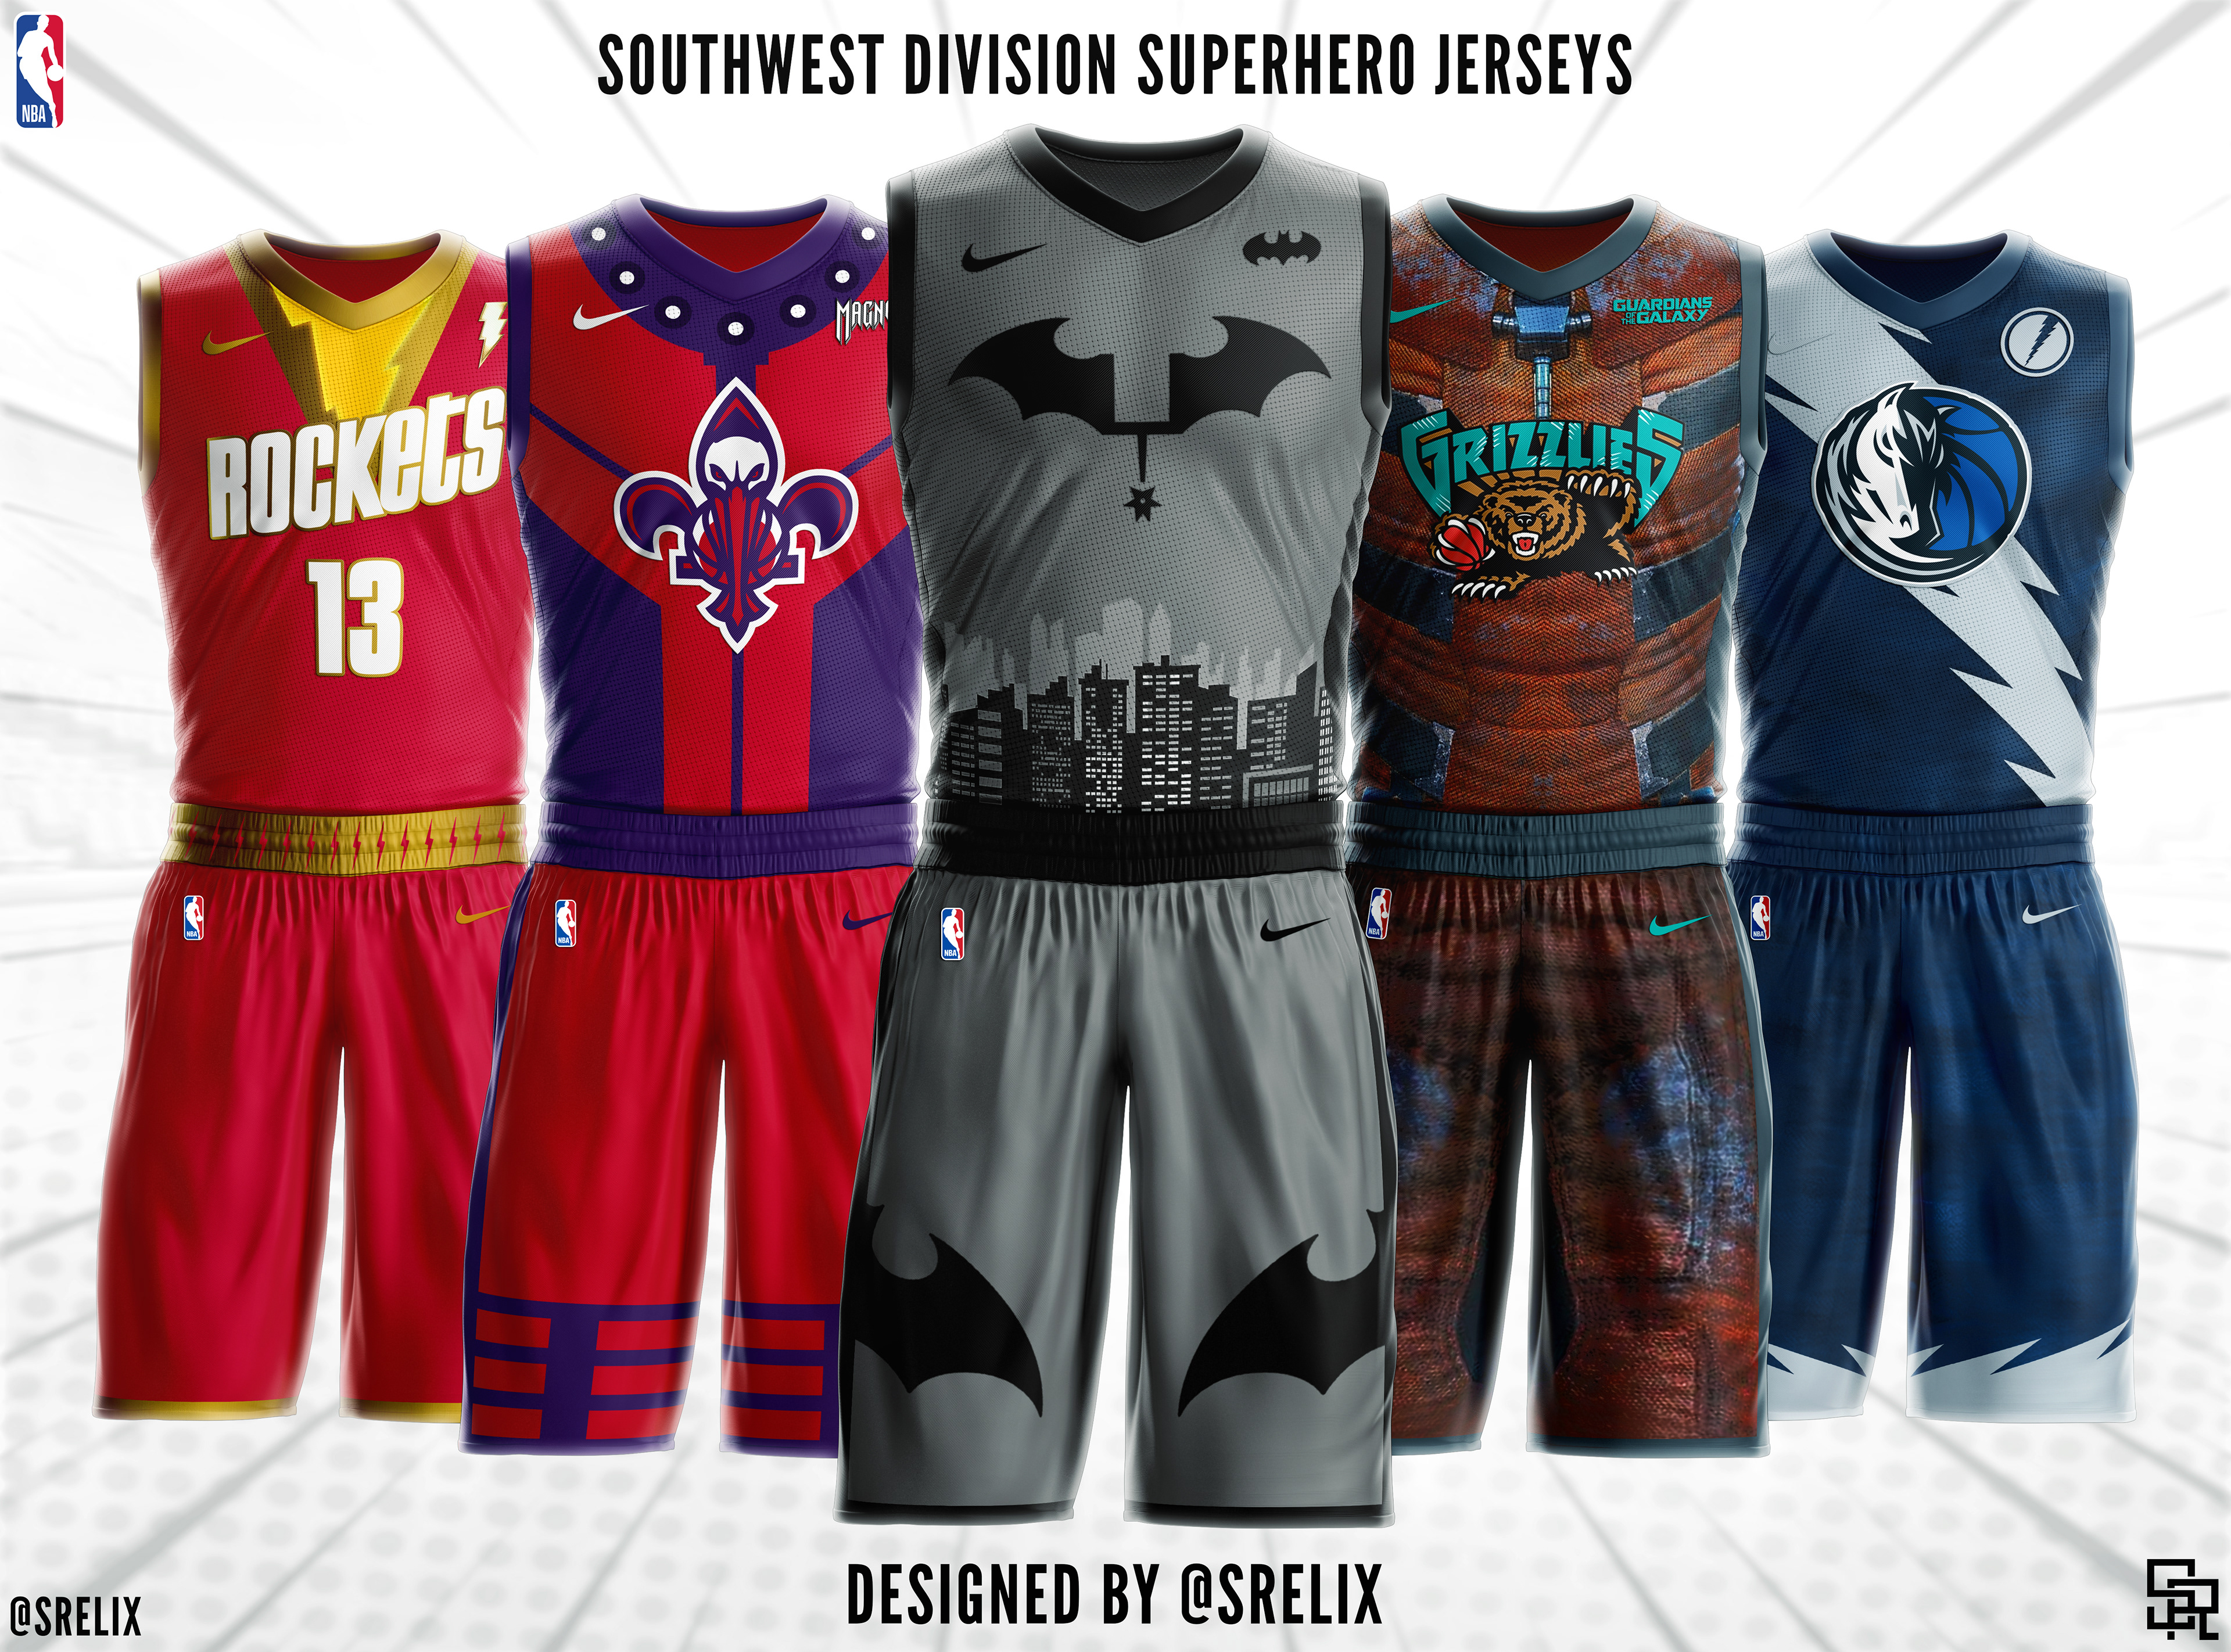 SRELIX Portfolio - Hypebeast NBA/NFL Jersey Concepts